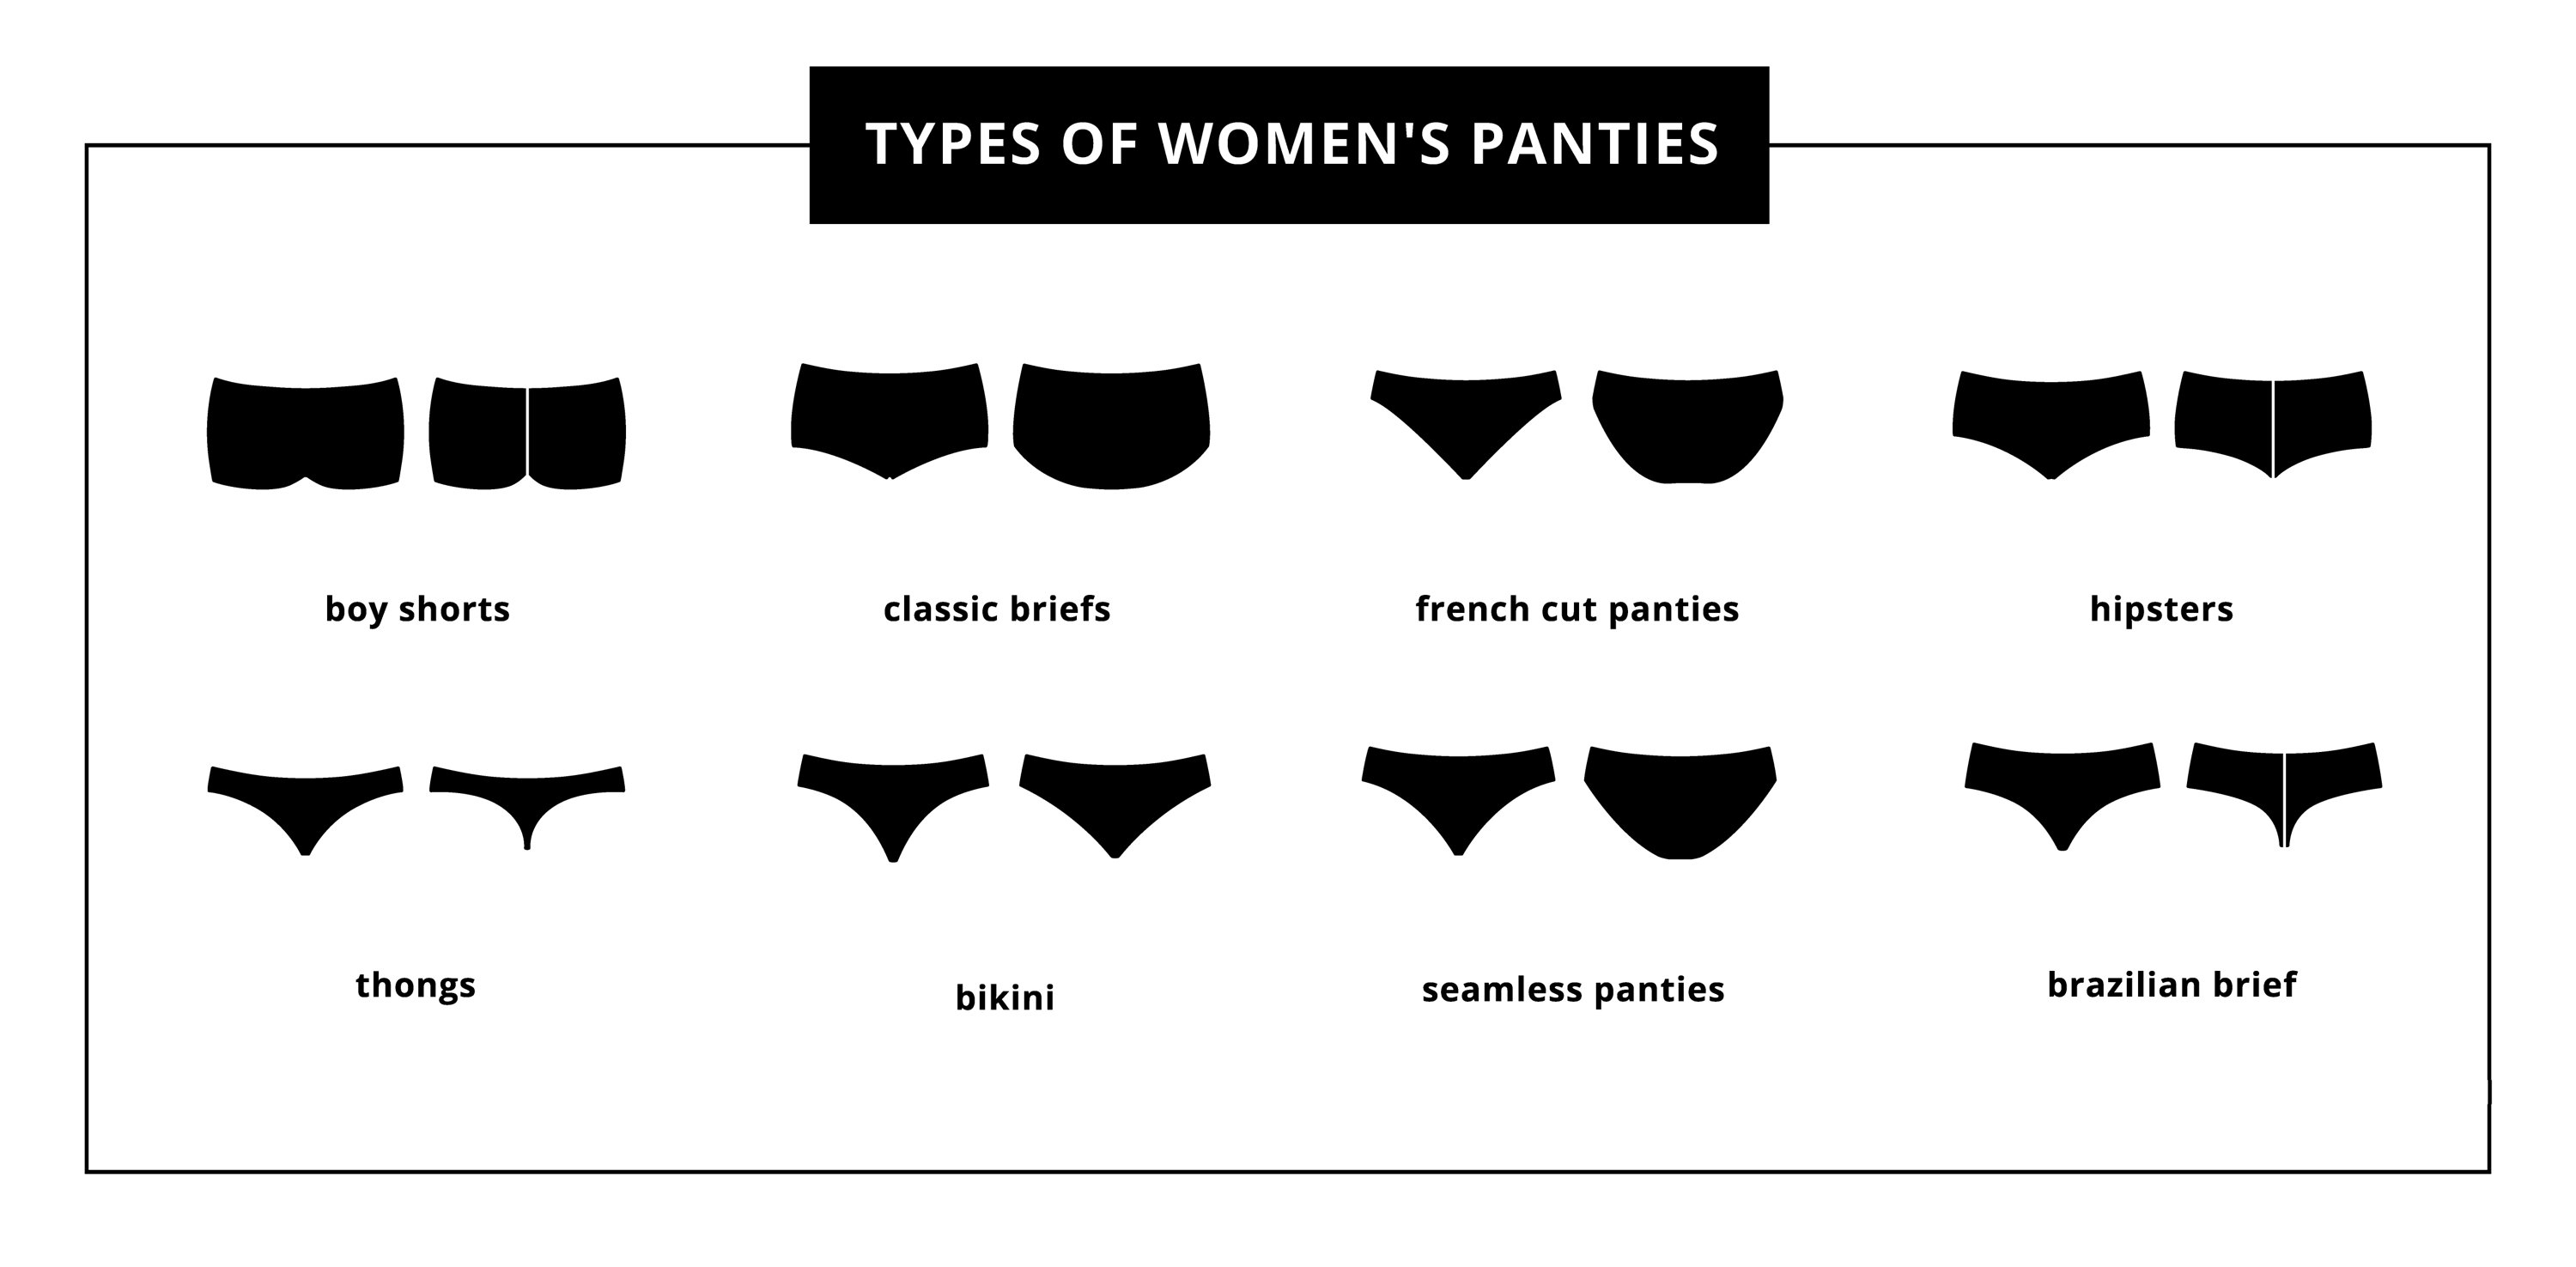 types of women's panties